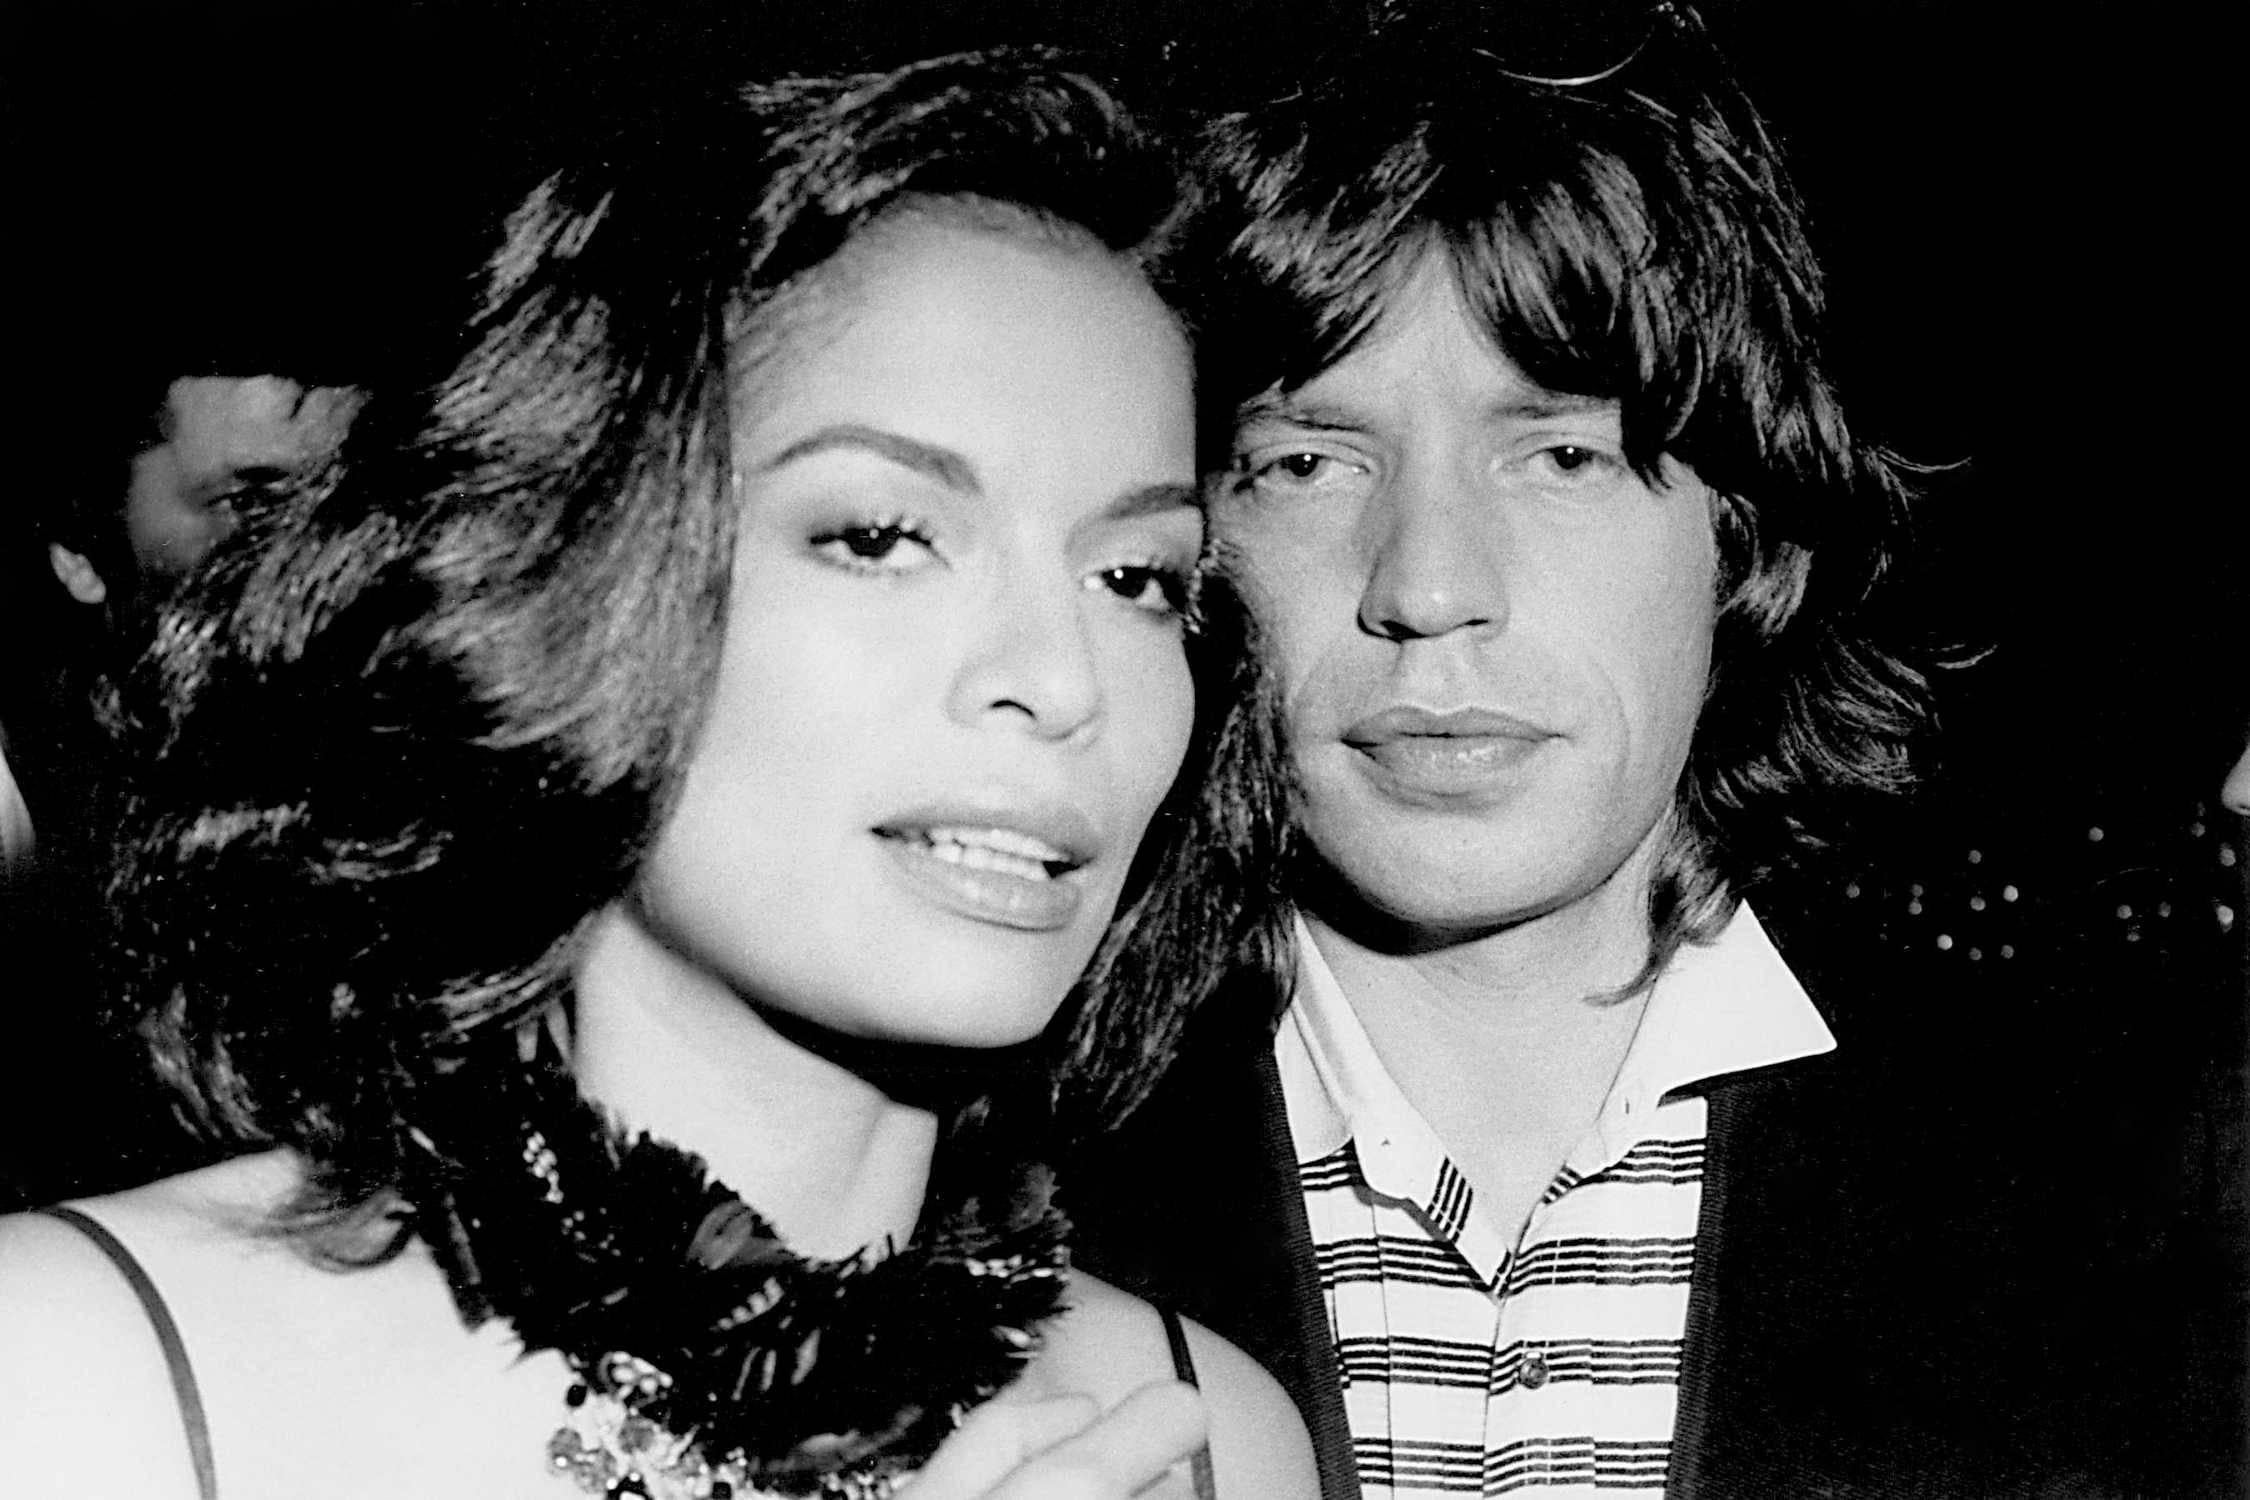 Unknown Portrait Photograph - Mick and Bianca Jagger at Studio 54 Fine Art Print